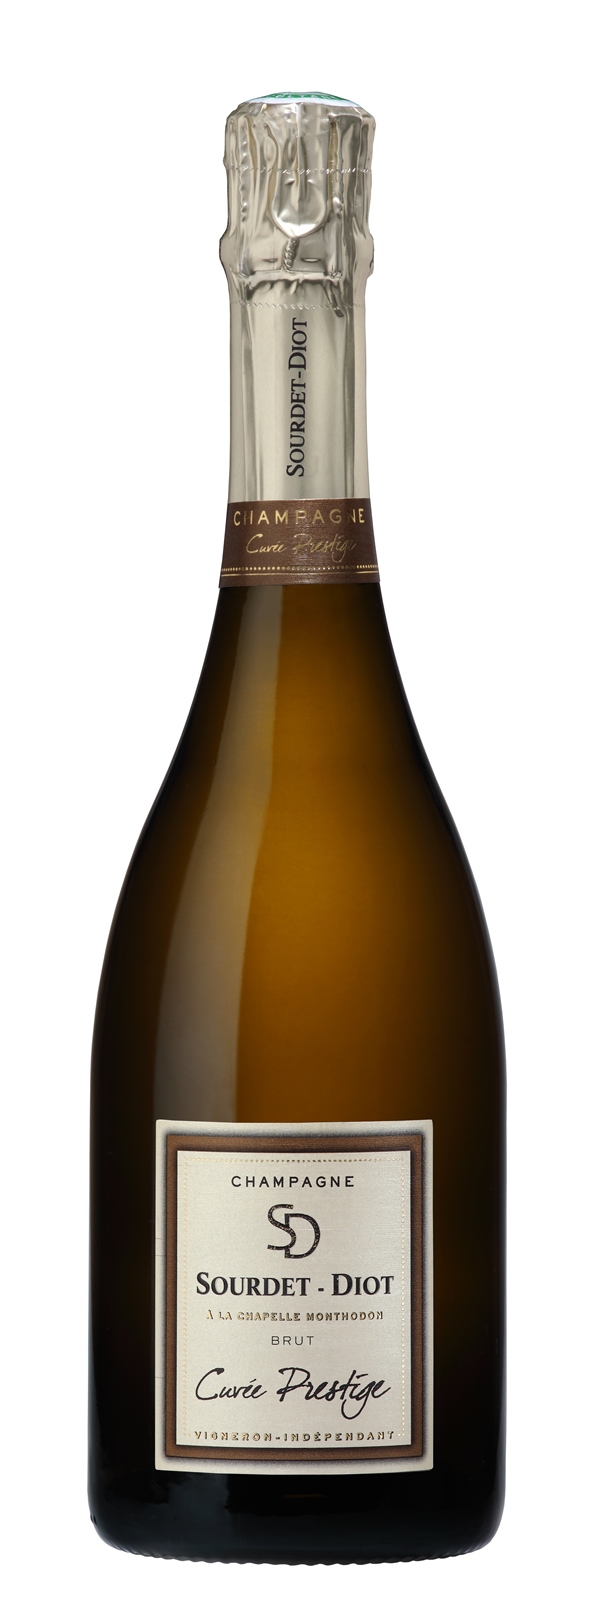 capsule champagne SOURDET DIOT cuvée 2017 blanc et rose 